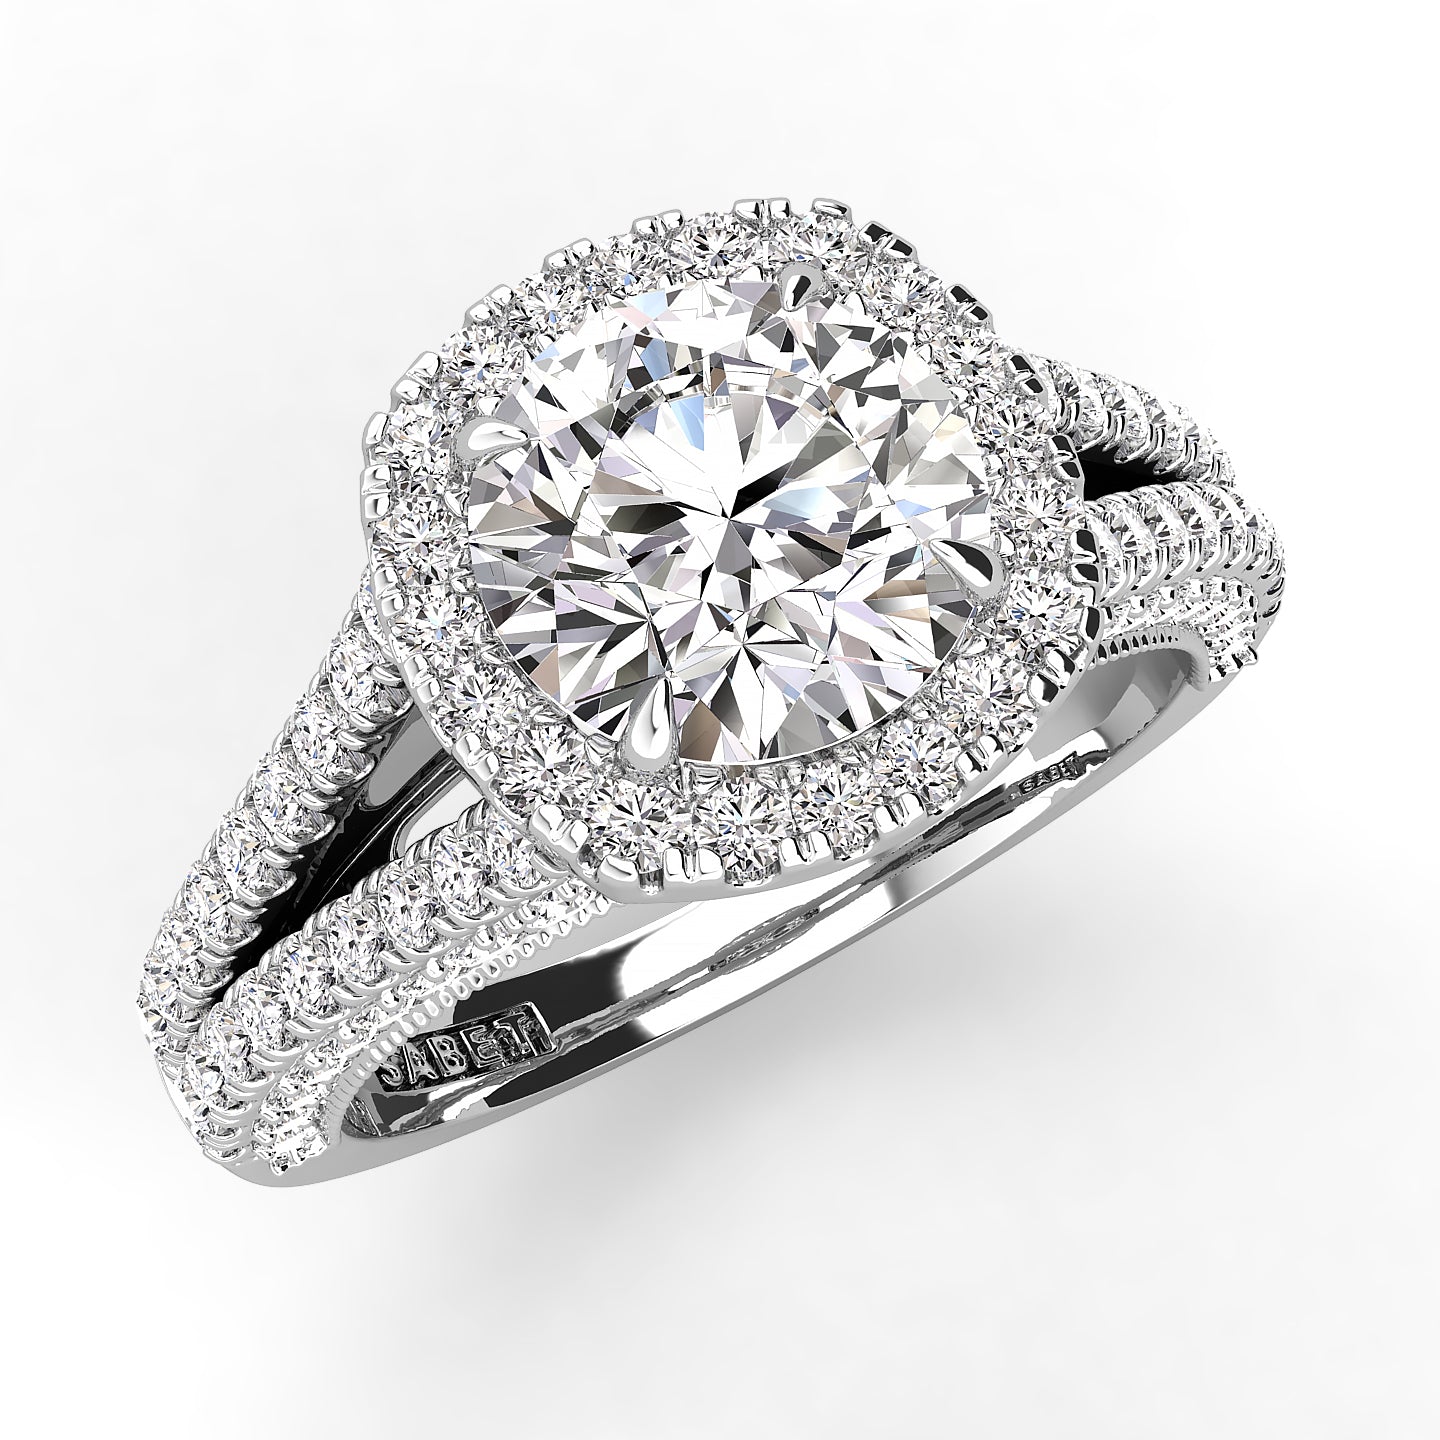 1 Carat Round Cut Diamond Ring | Barkev's